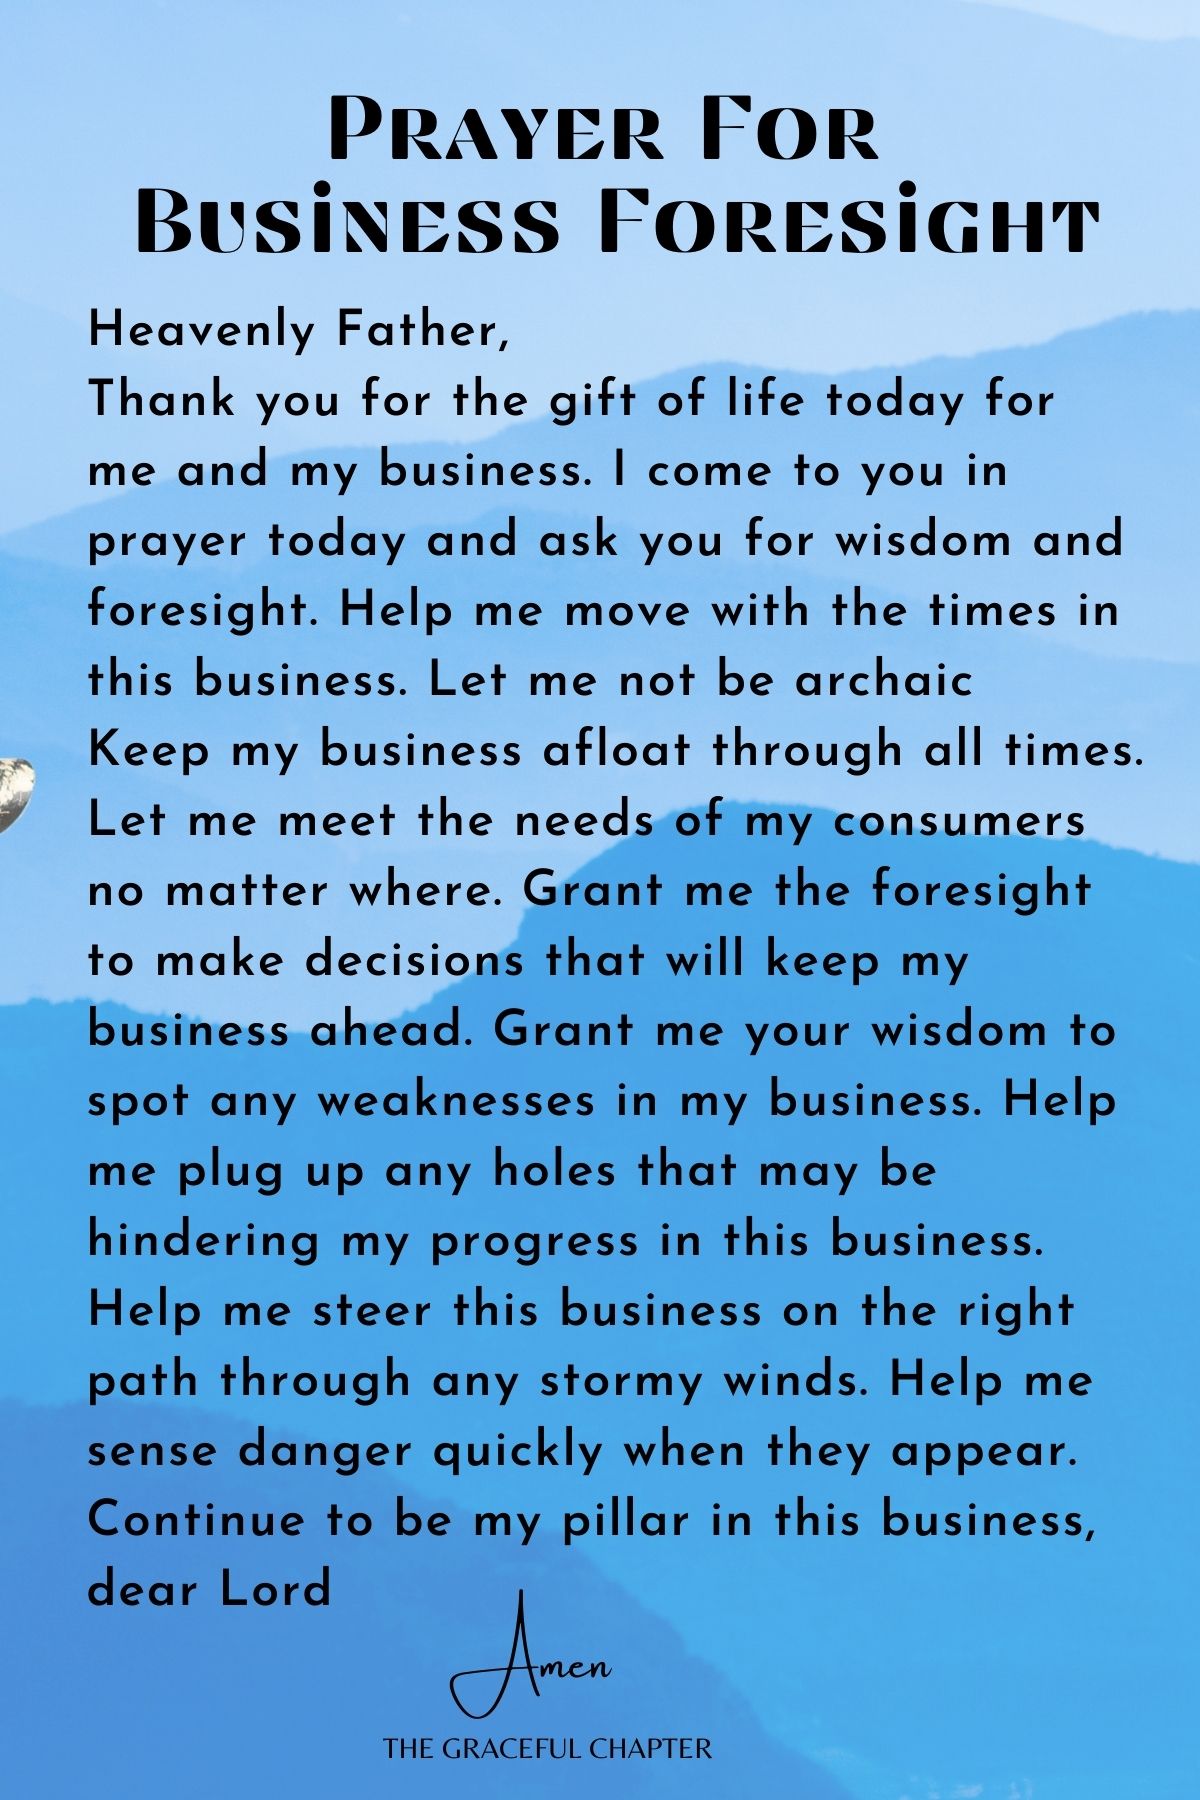 Prayer for foresight in business